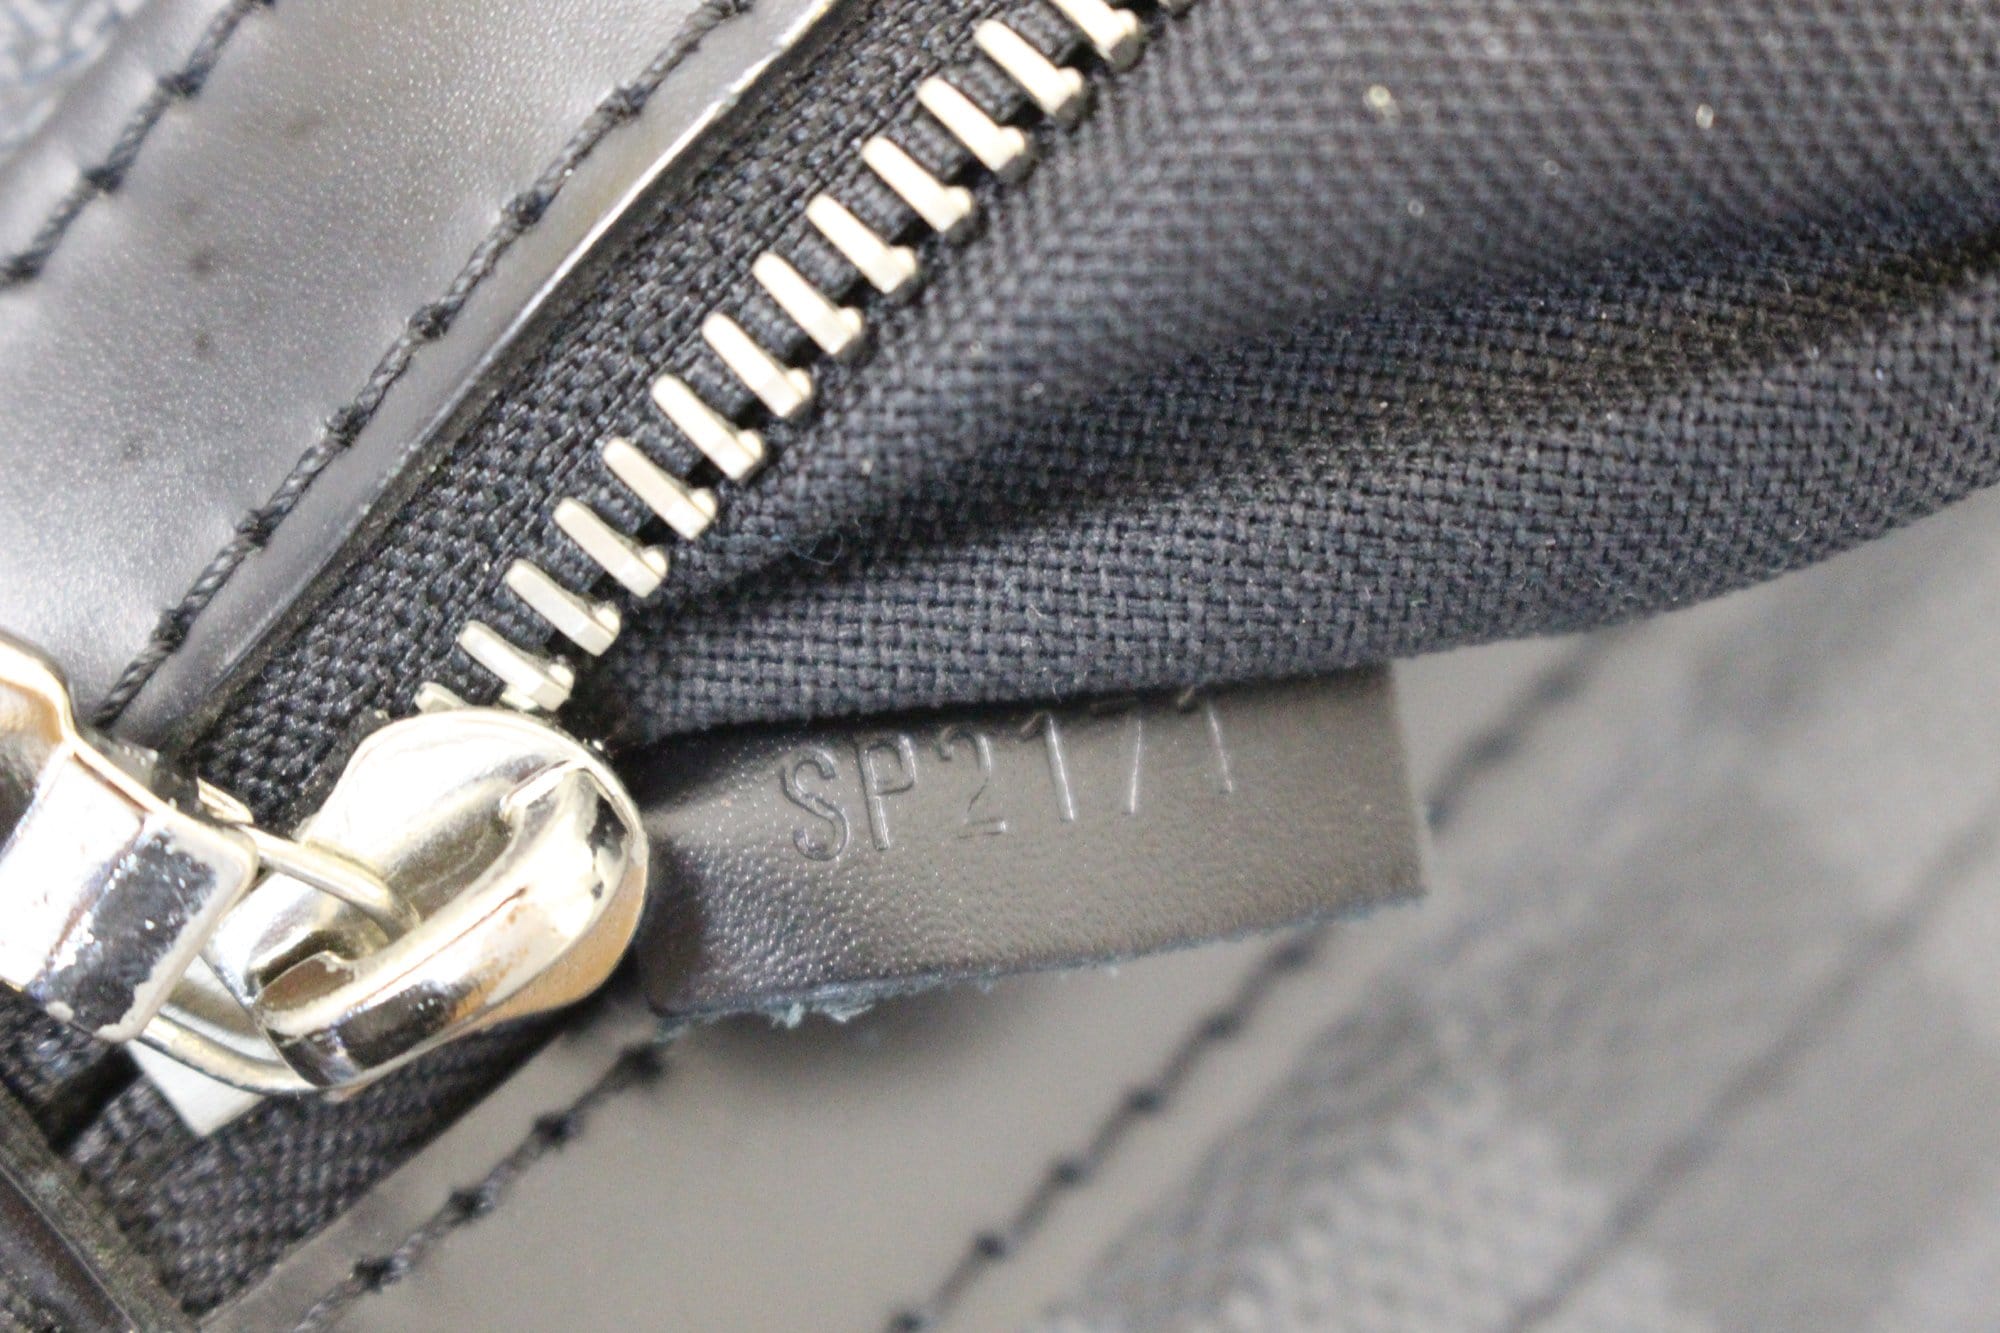 Daniel mm satchel fabric bag Louis Vuitton Black in Cloth - 35314116